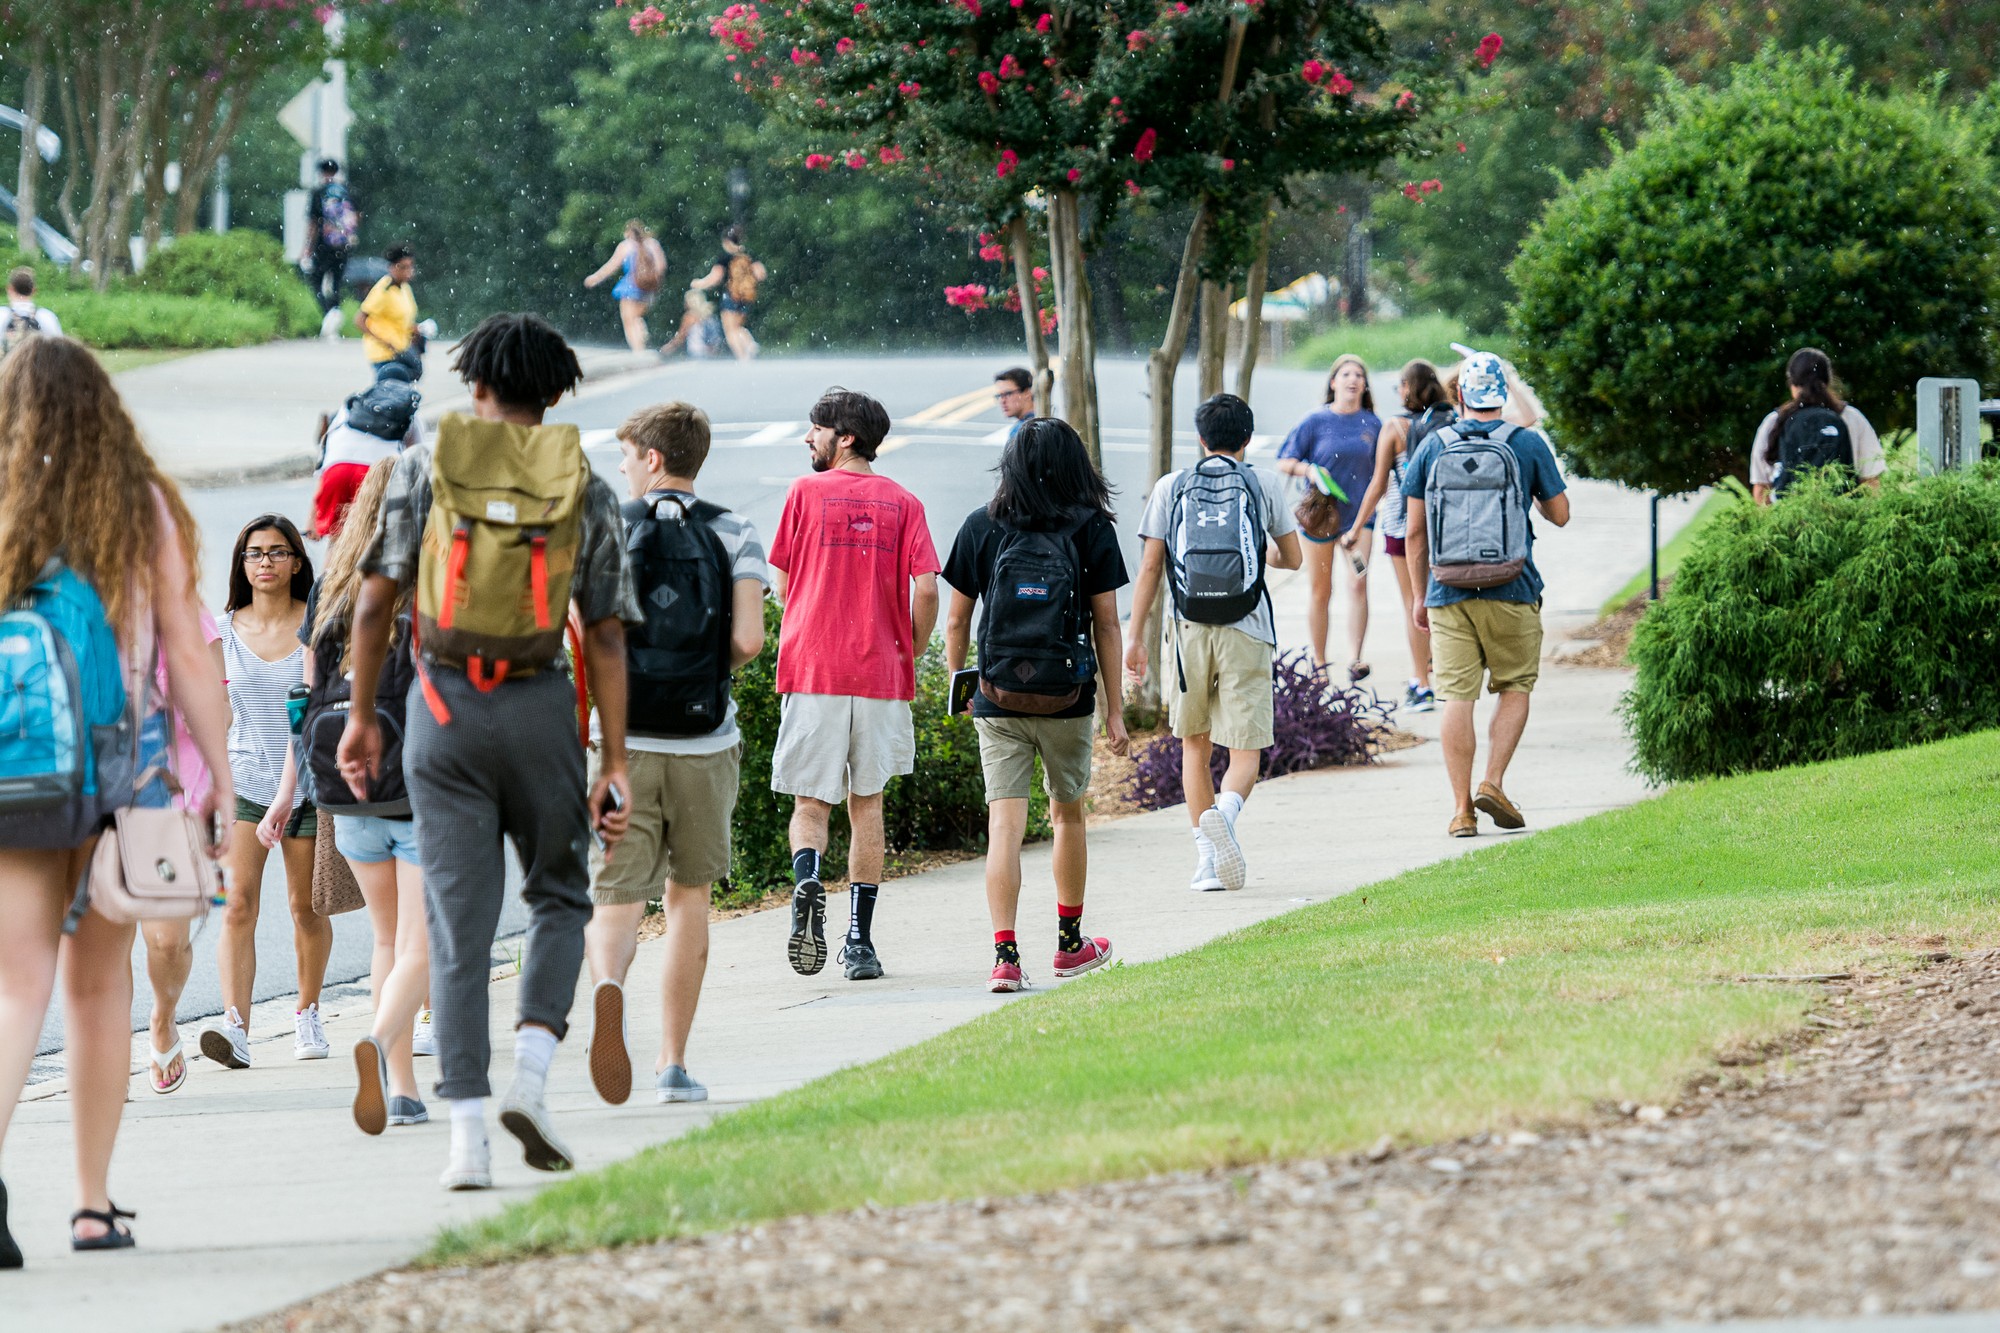 Students struggle with overcrowding at KSU